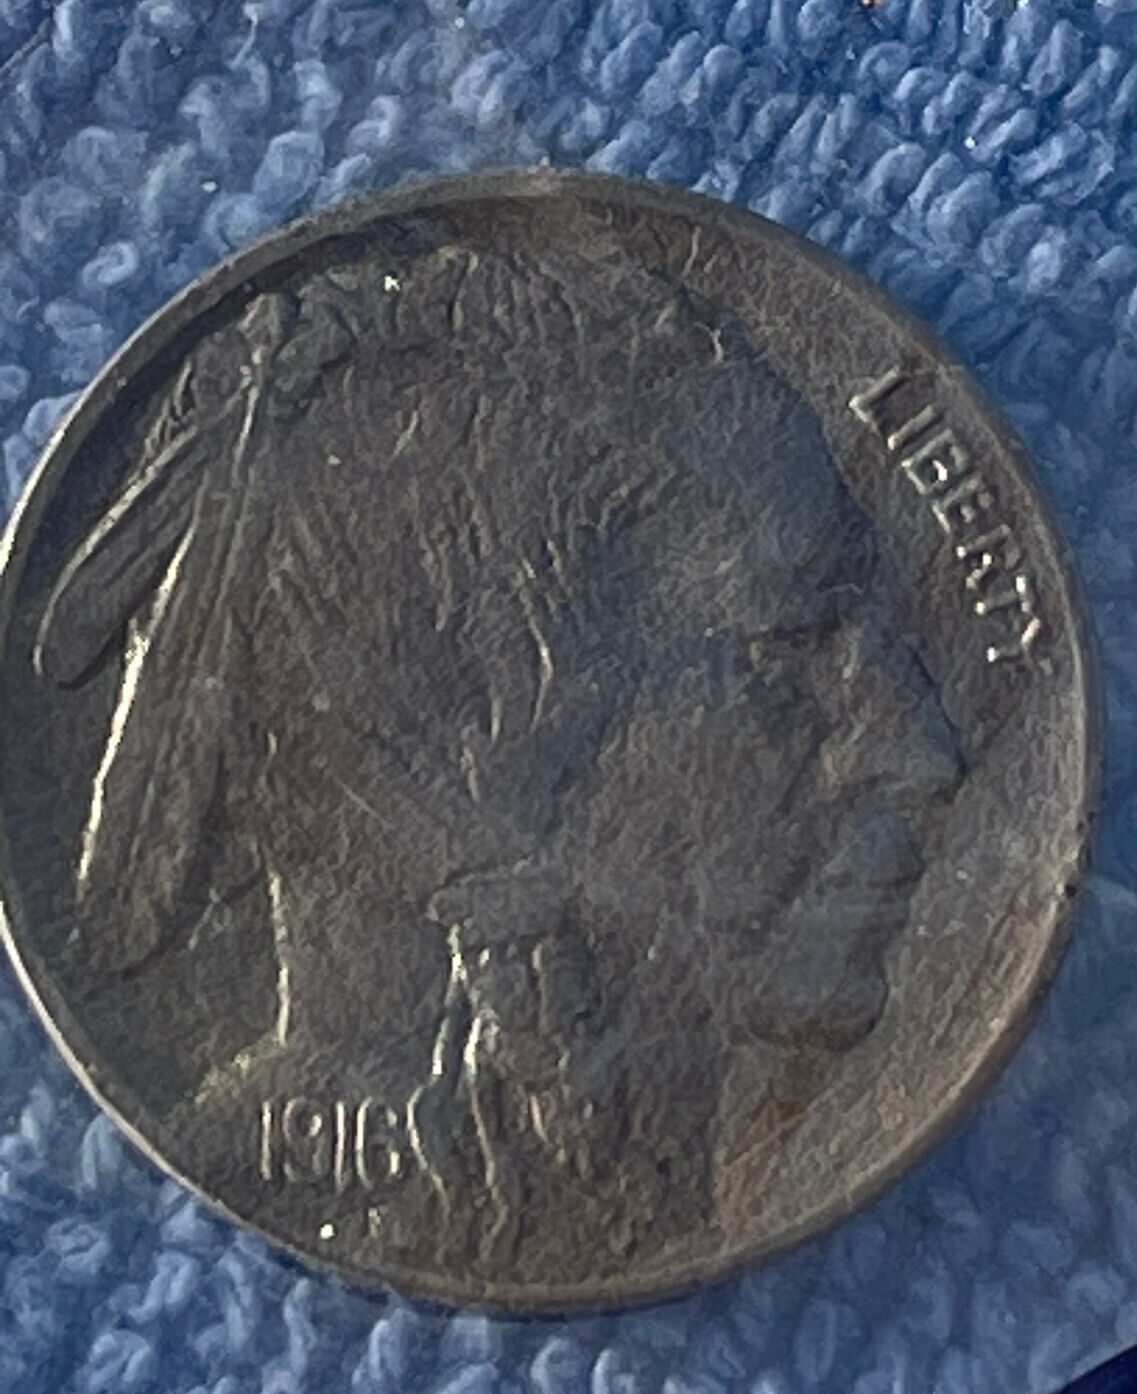 Gemmy 1916 Brilliant Uncirculated Buffalo Nickel 107 years young!